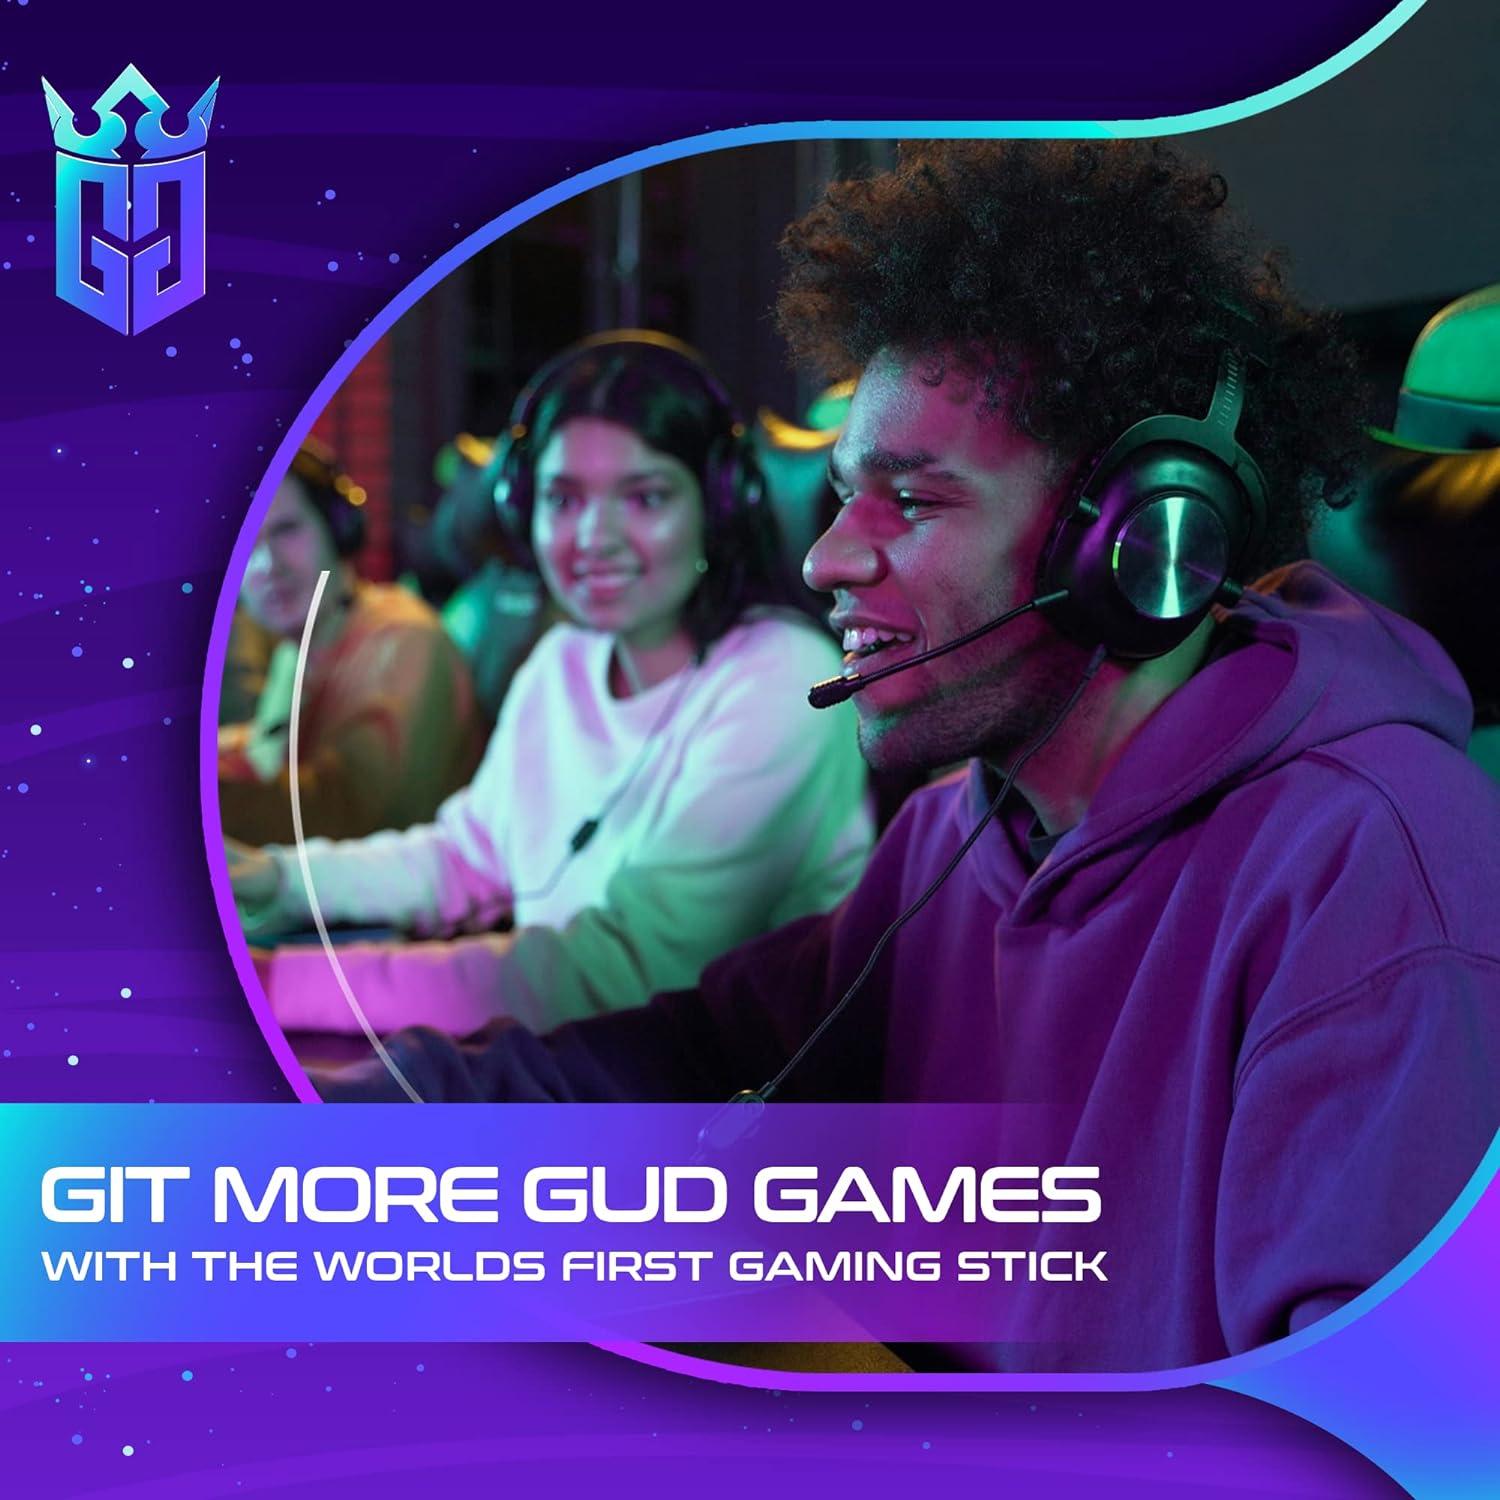 Variety No. 1 Elite Gaming Energy Sticks – GIT GUD